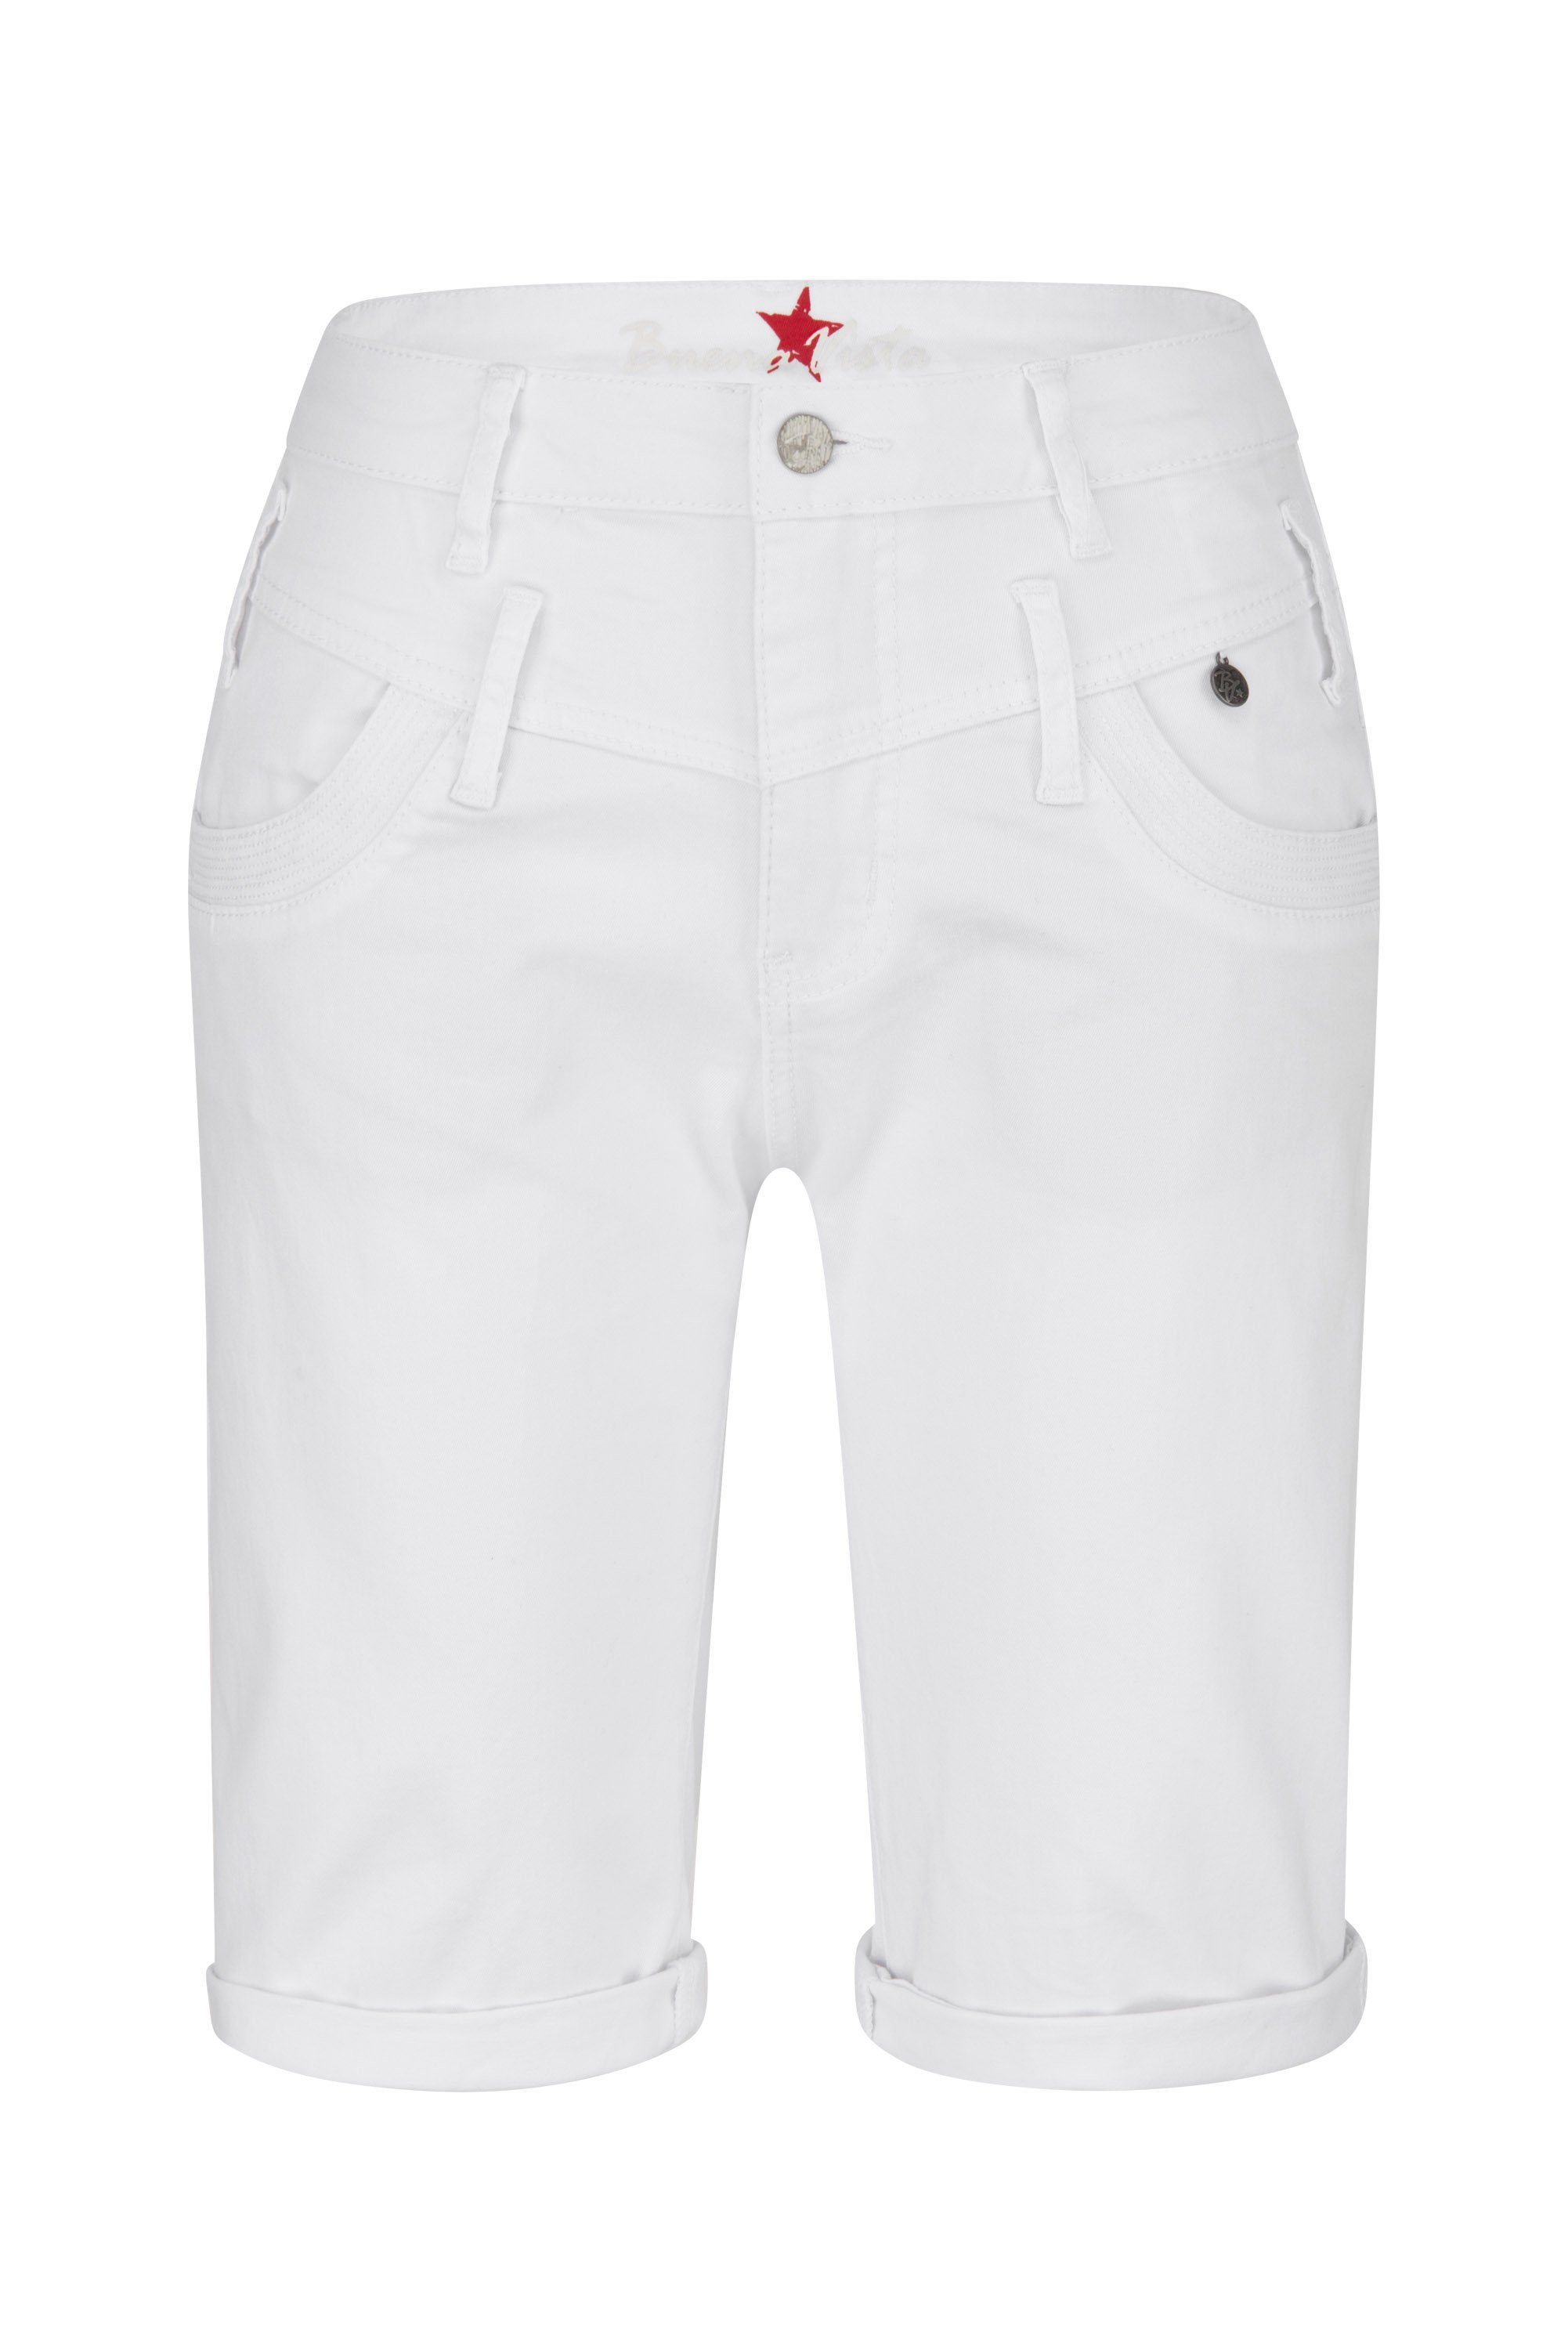 BUENA FLORIDA Stretch-Jeans SHORT Vista J5746 Twill - 502.032 2106 Stretch VISTA white Buena